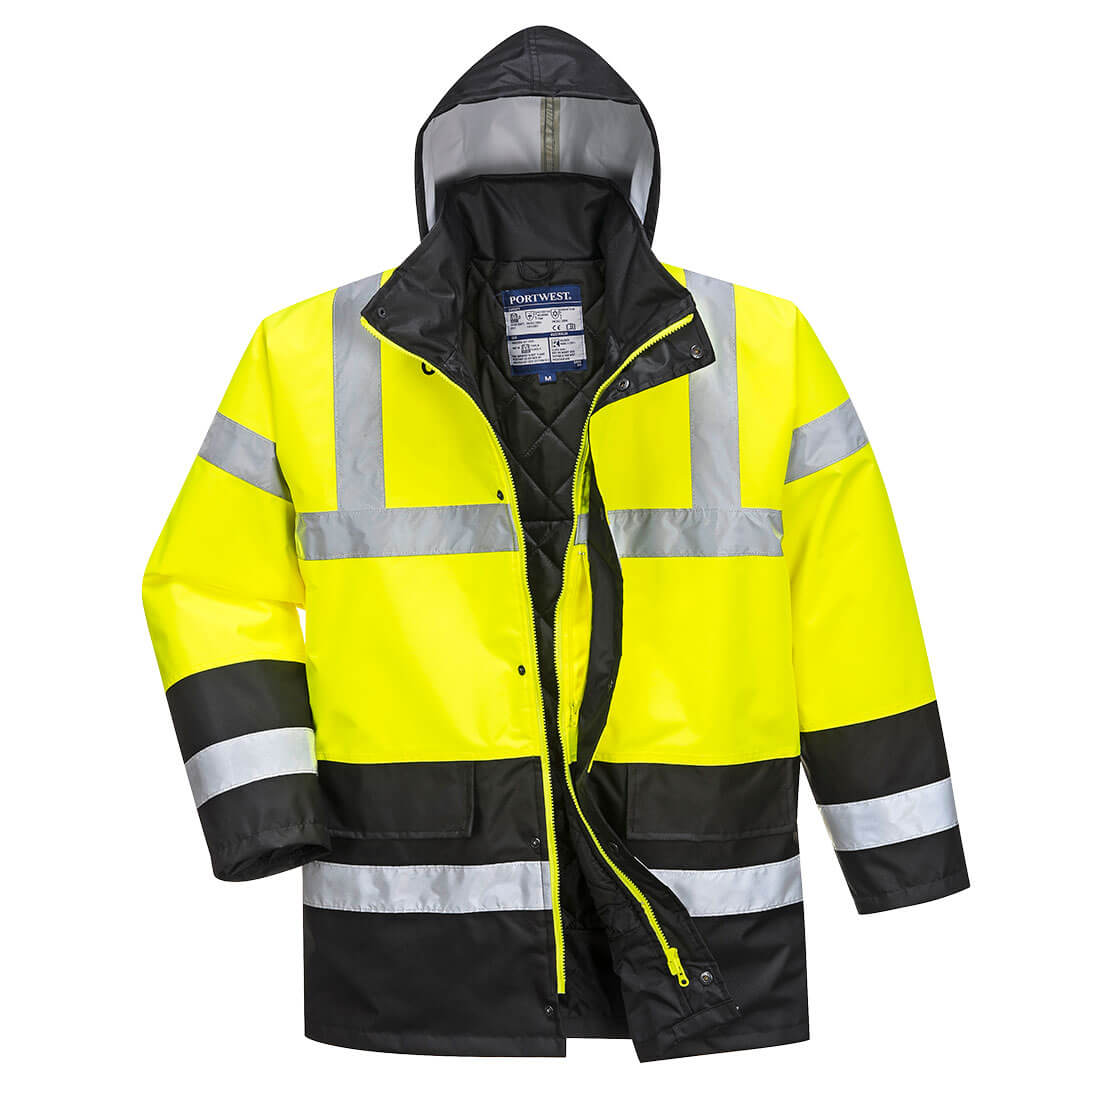 Portwest S466 Hi-Vis Contrast Winter Traffic Jacket - Yellow/Black